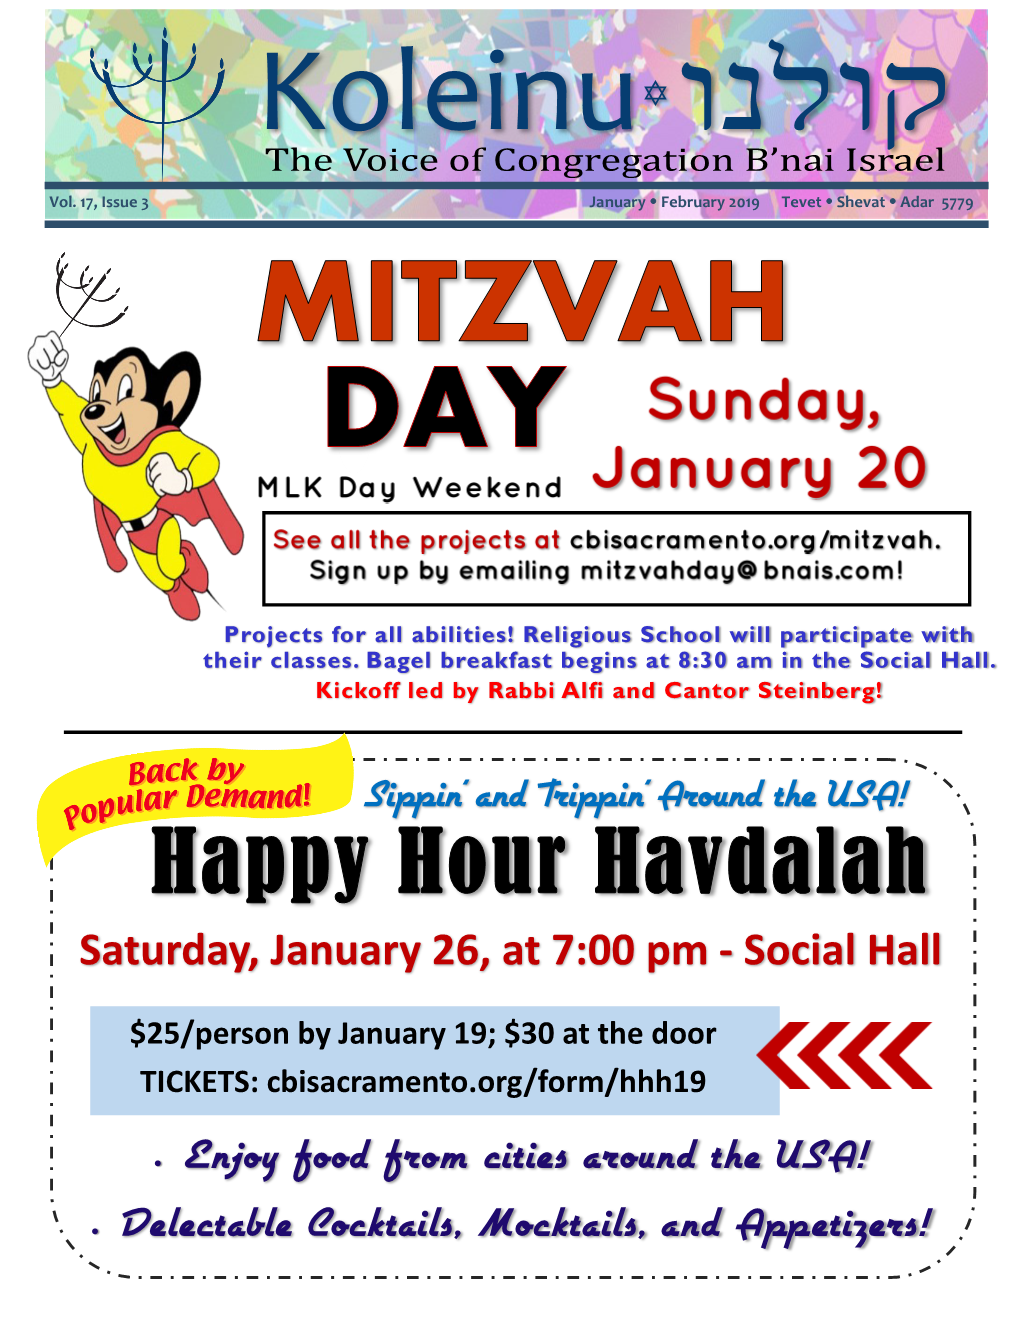 Happy Hour Havdalah Saturday, January 26, at 7:00 Pm - Social Hall